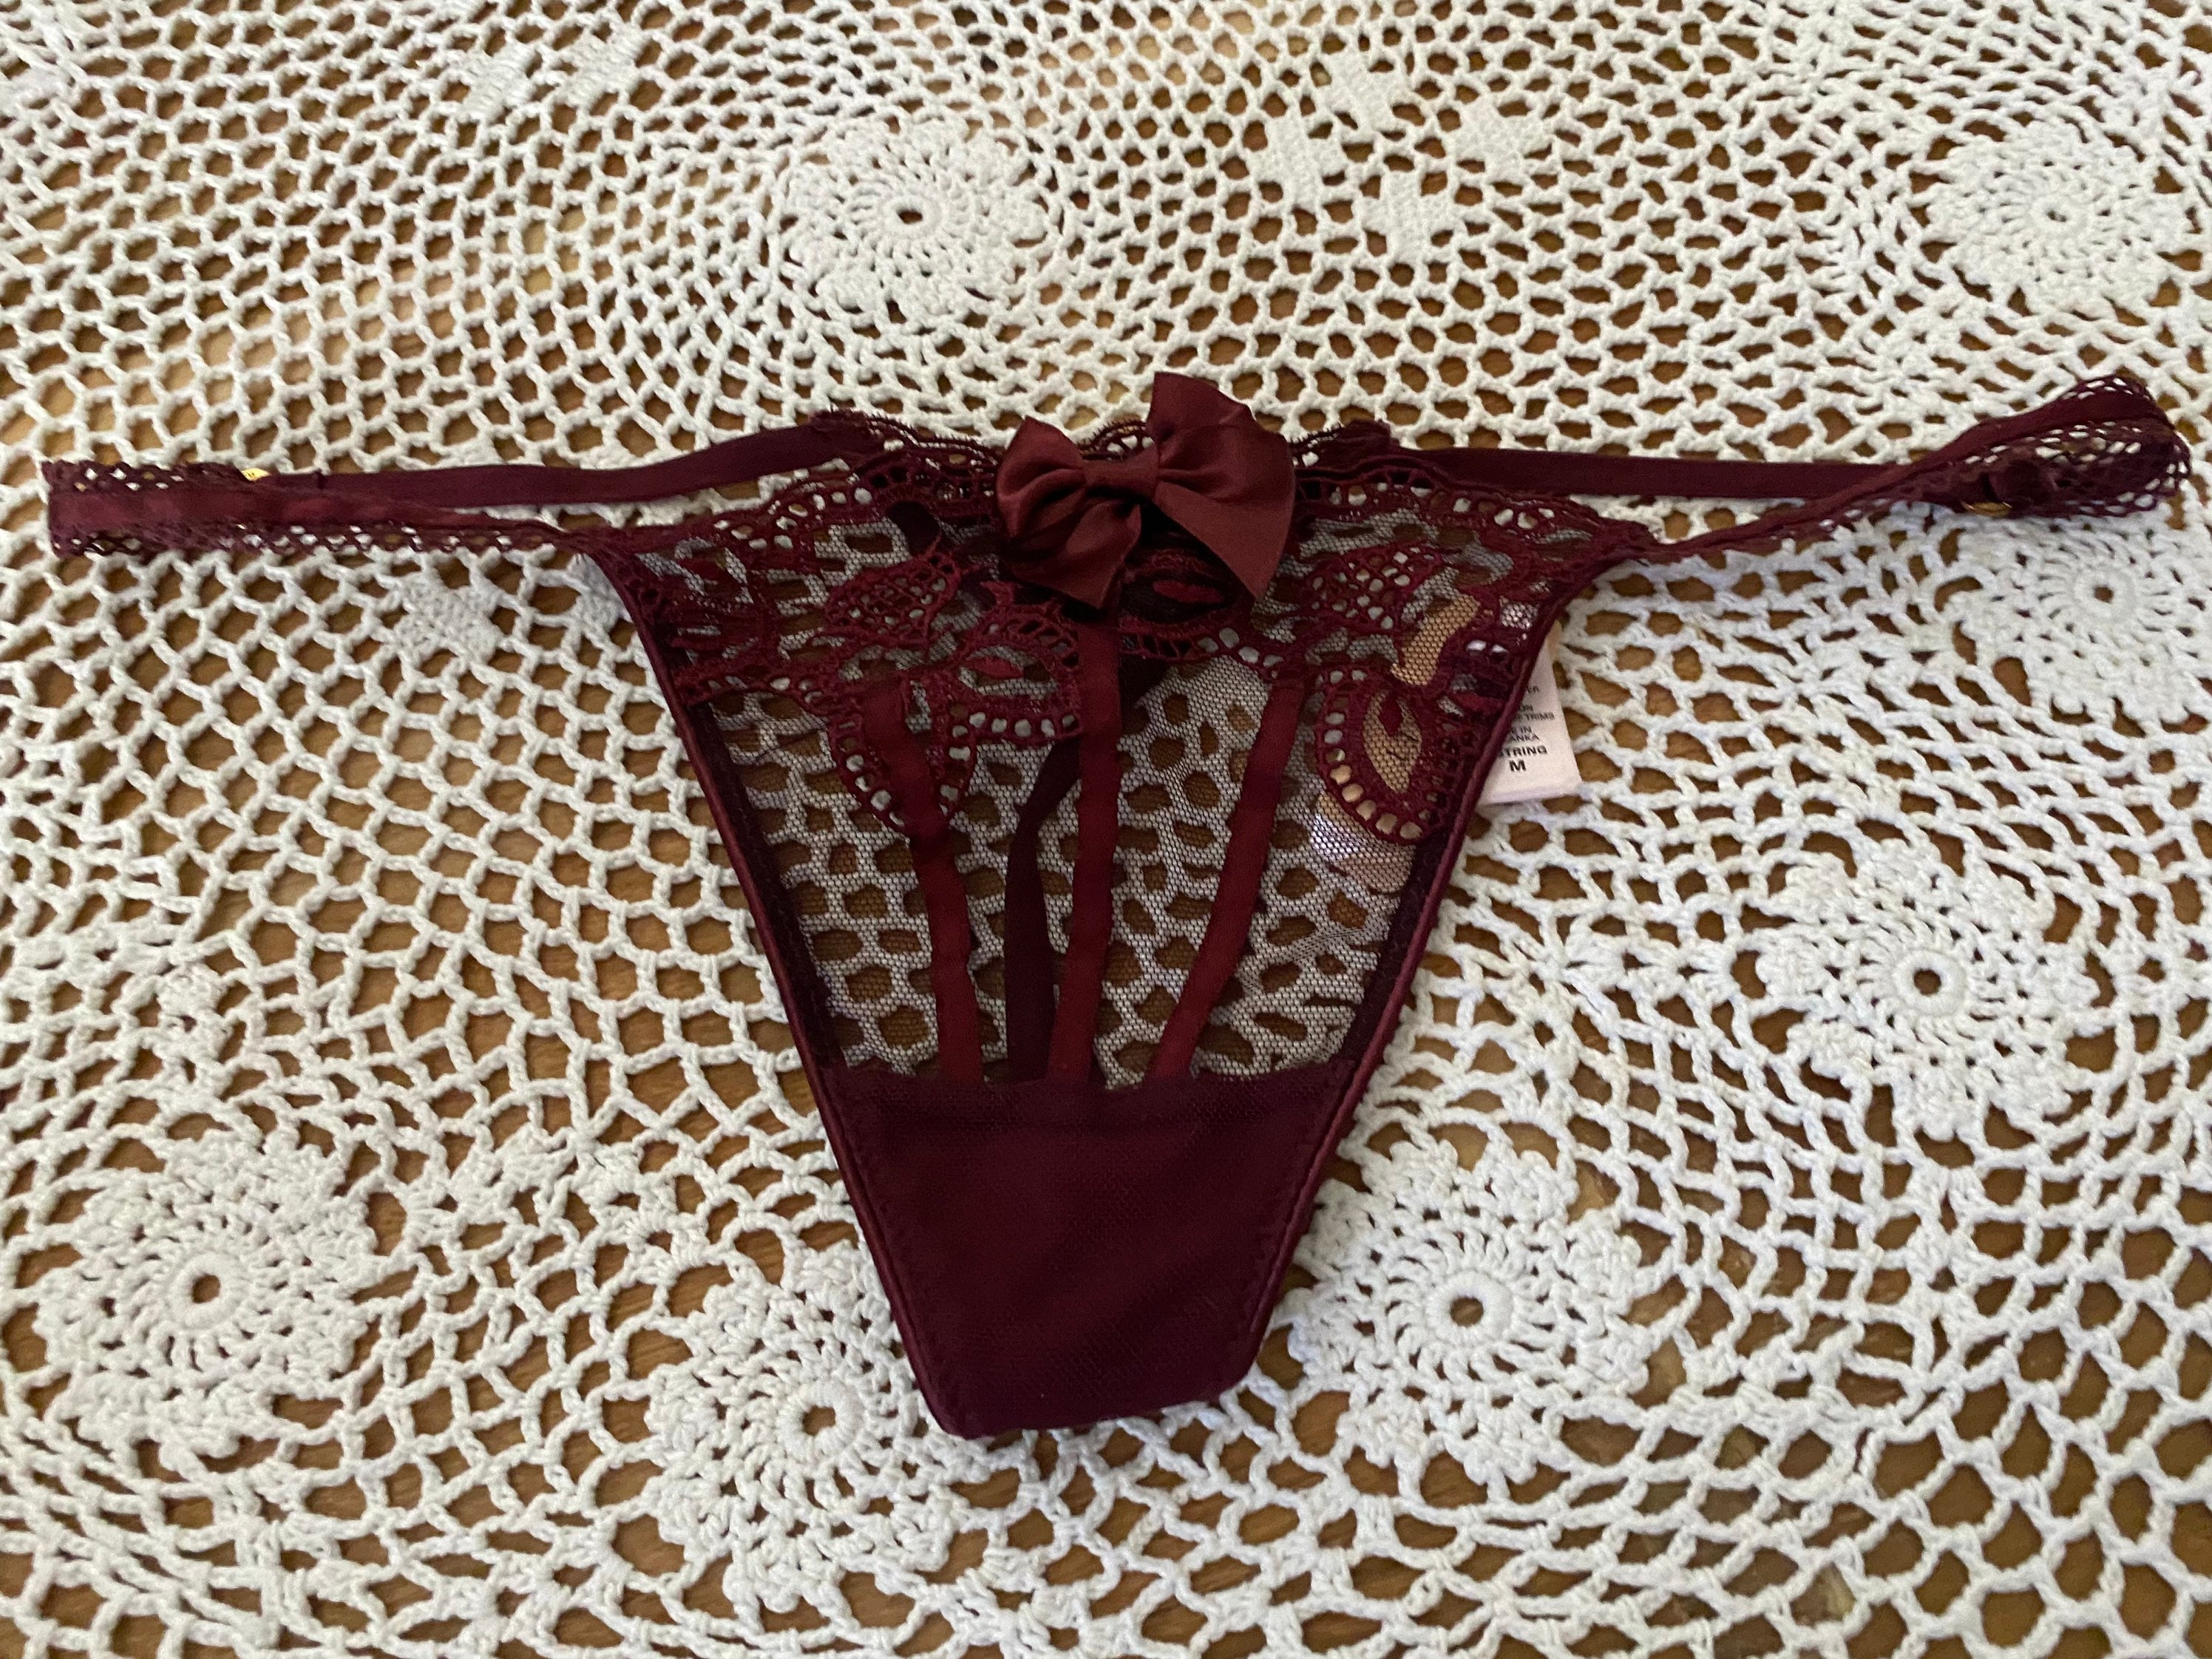 Victoria's Secret Ivory Lace Panties Size Medium REDUCED 